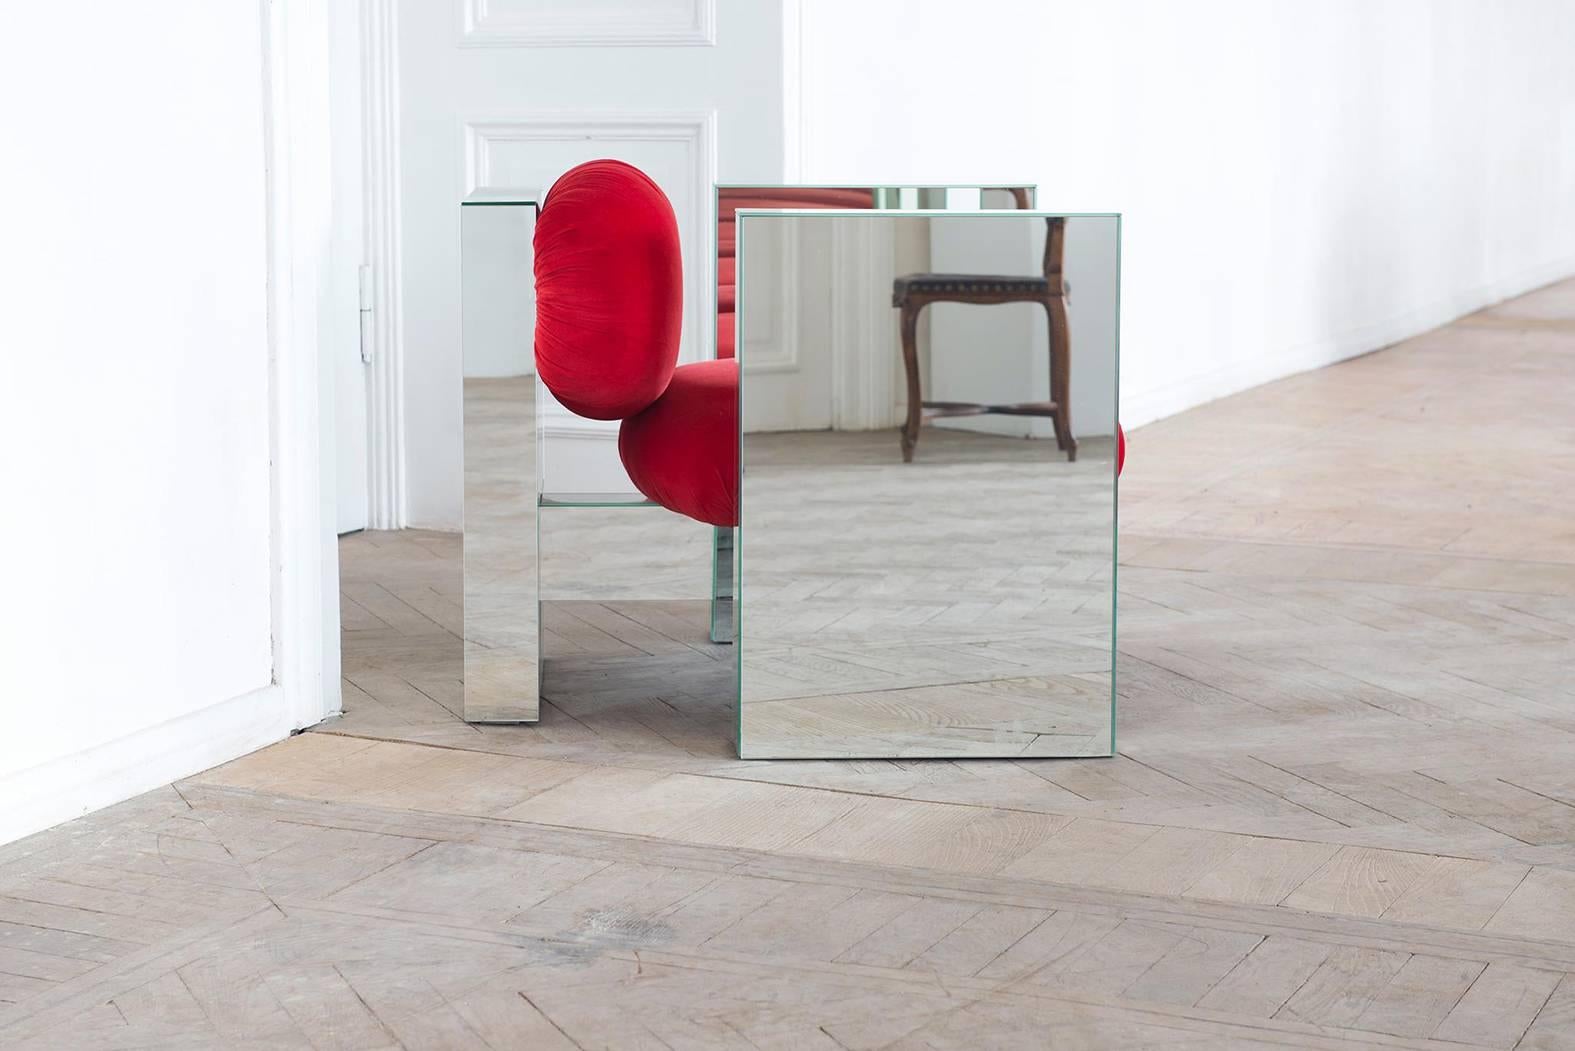 Georgian Invisible Mirror Armchair, Rooms